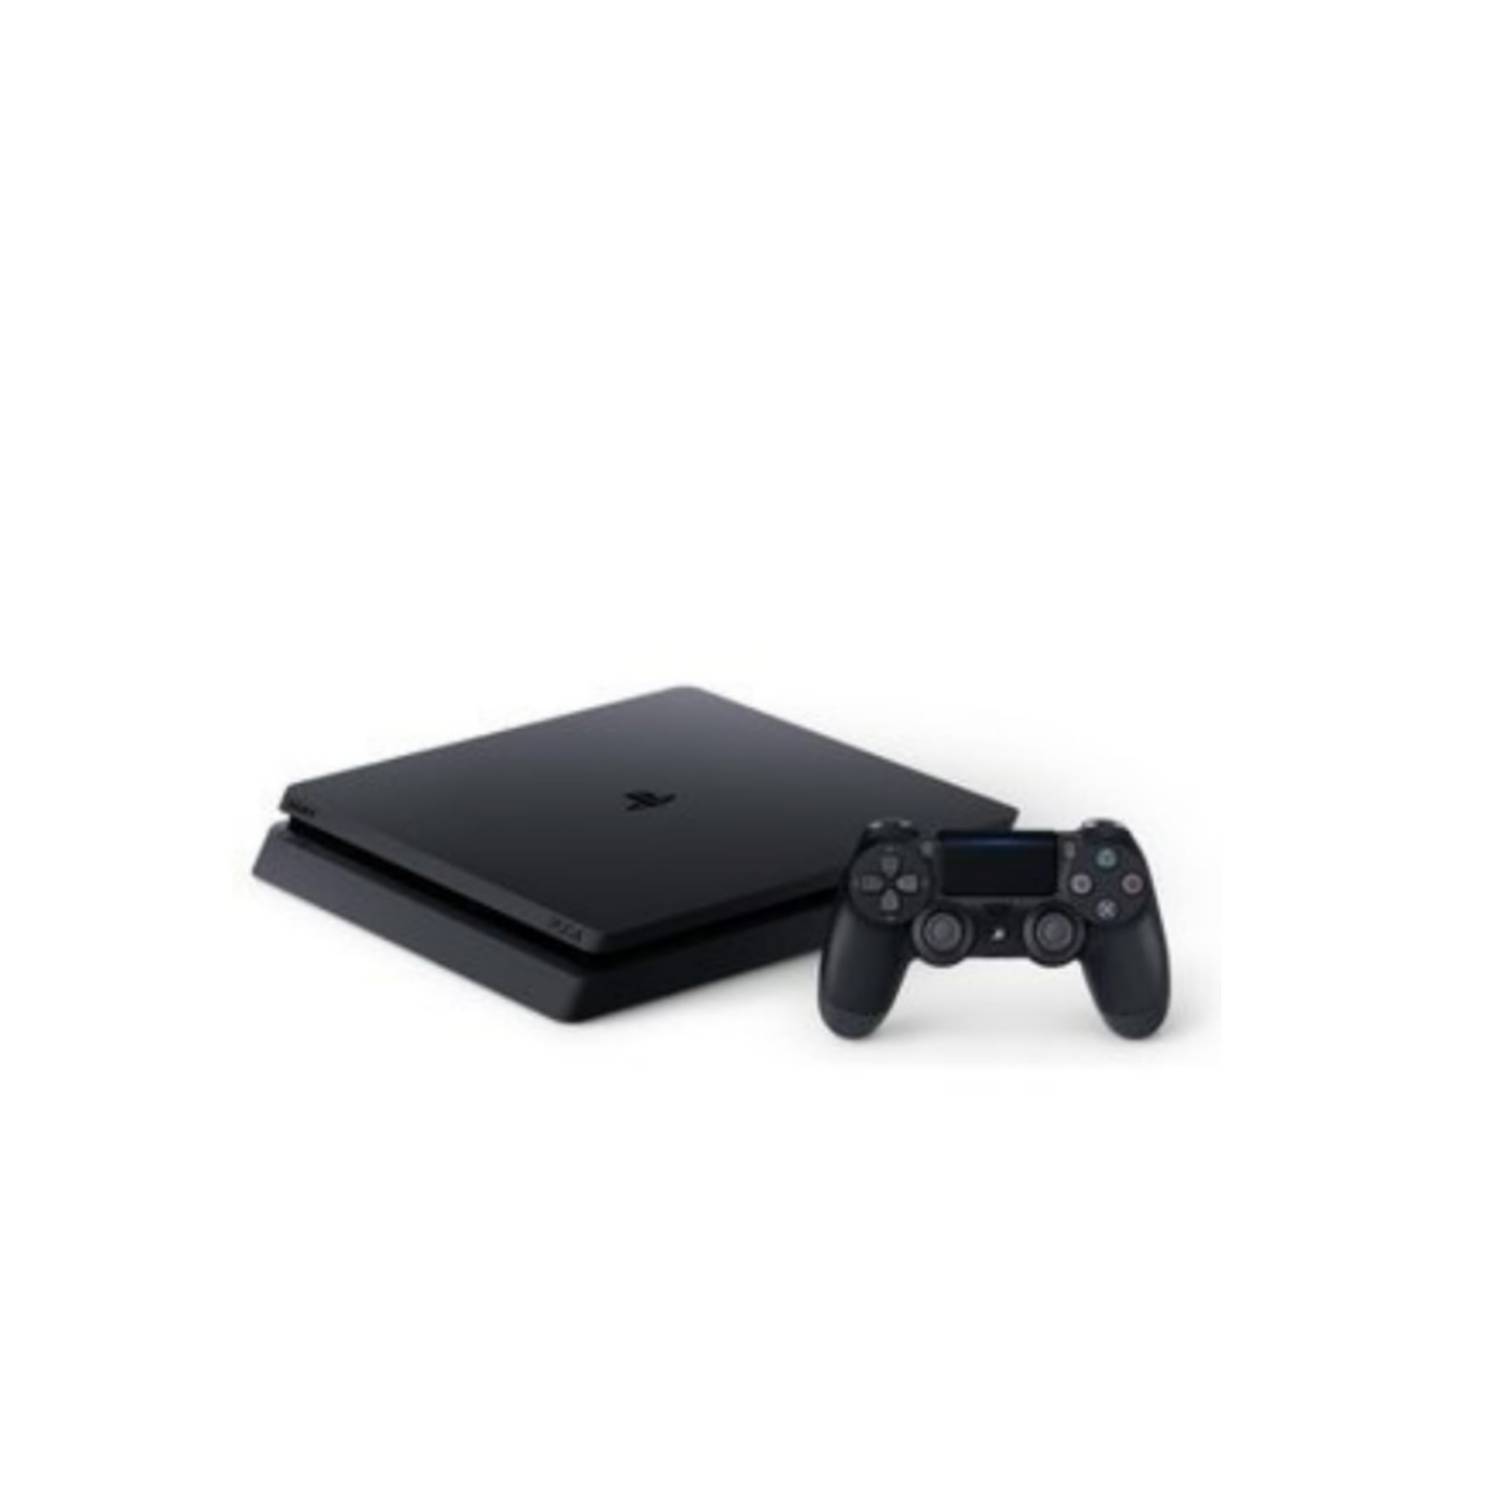 Consola PS4 Slim 500gb Negro - PlayStation 4 Reacondicionada. SONY